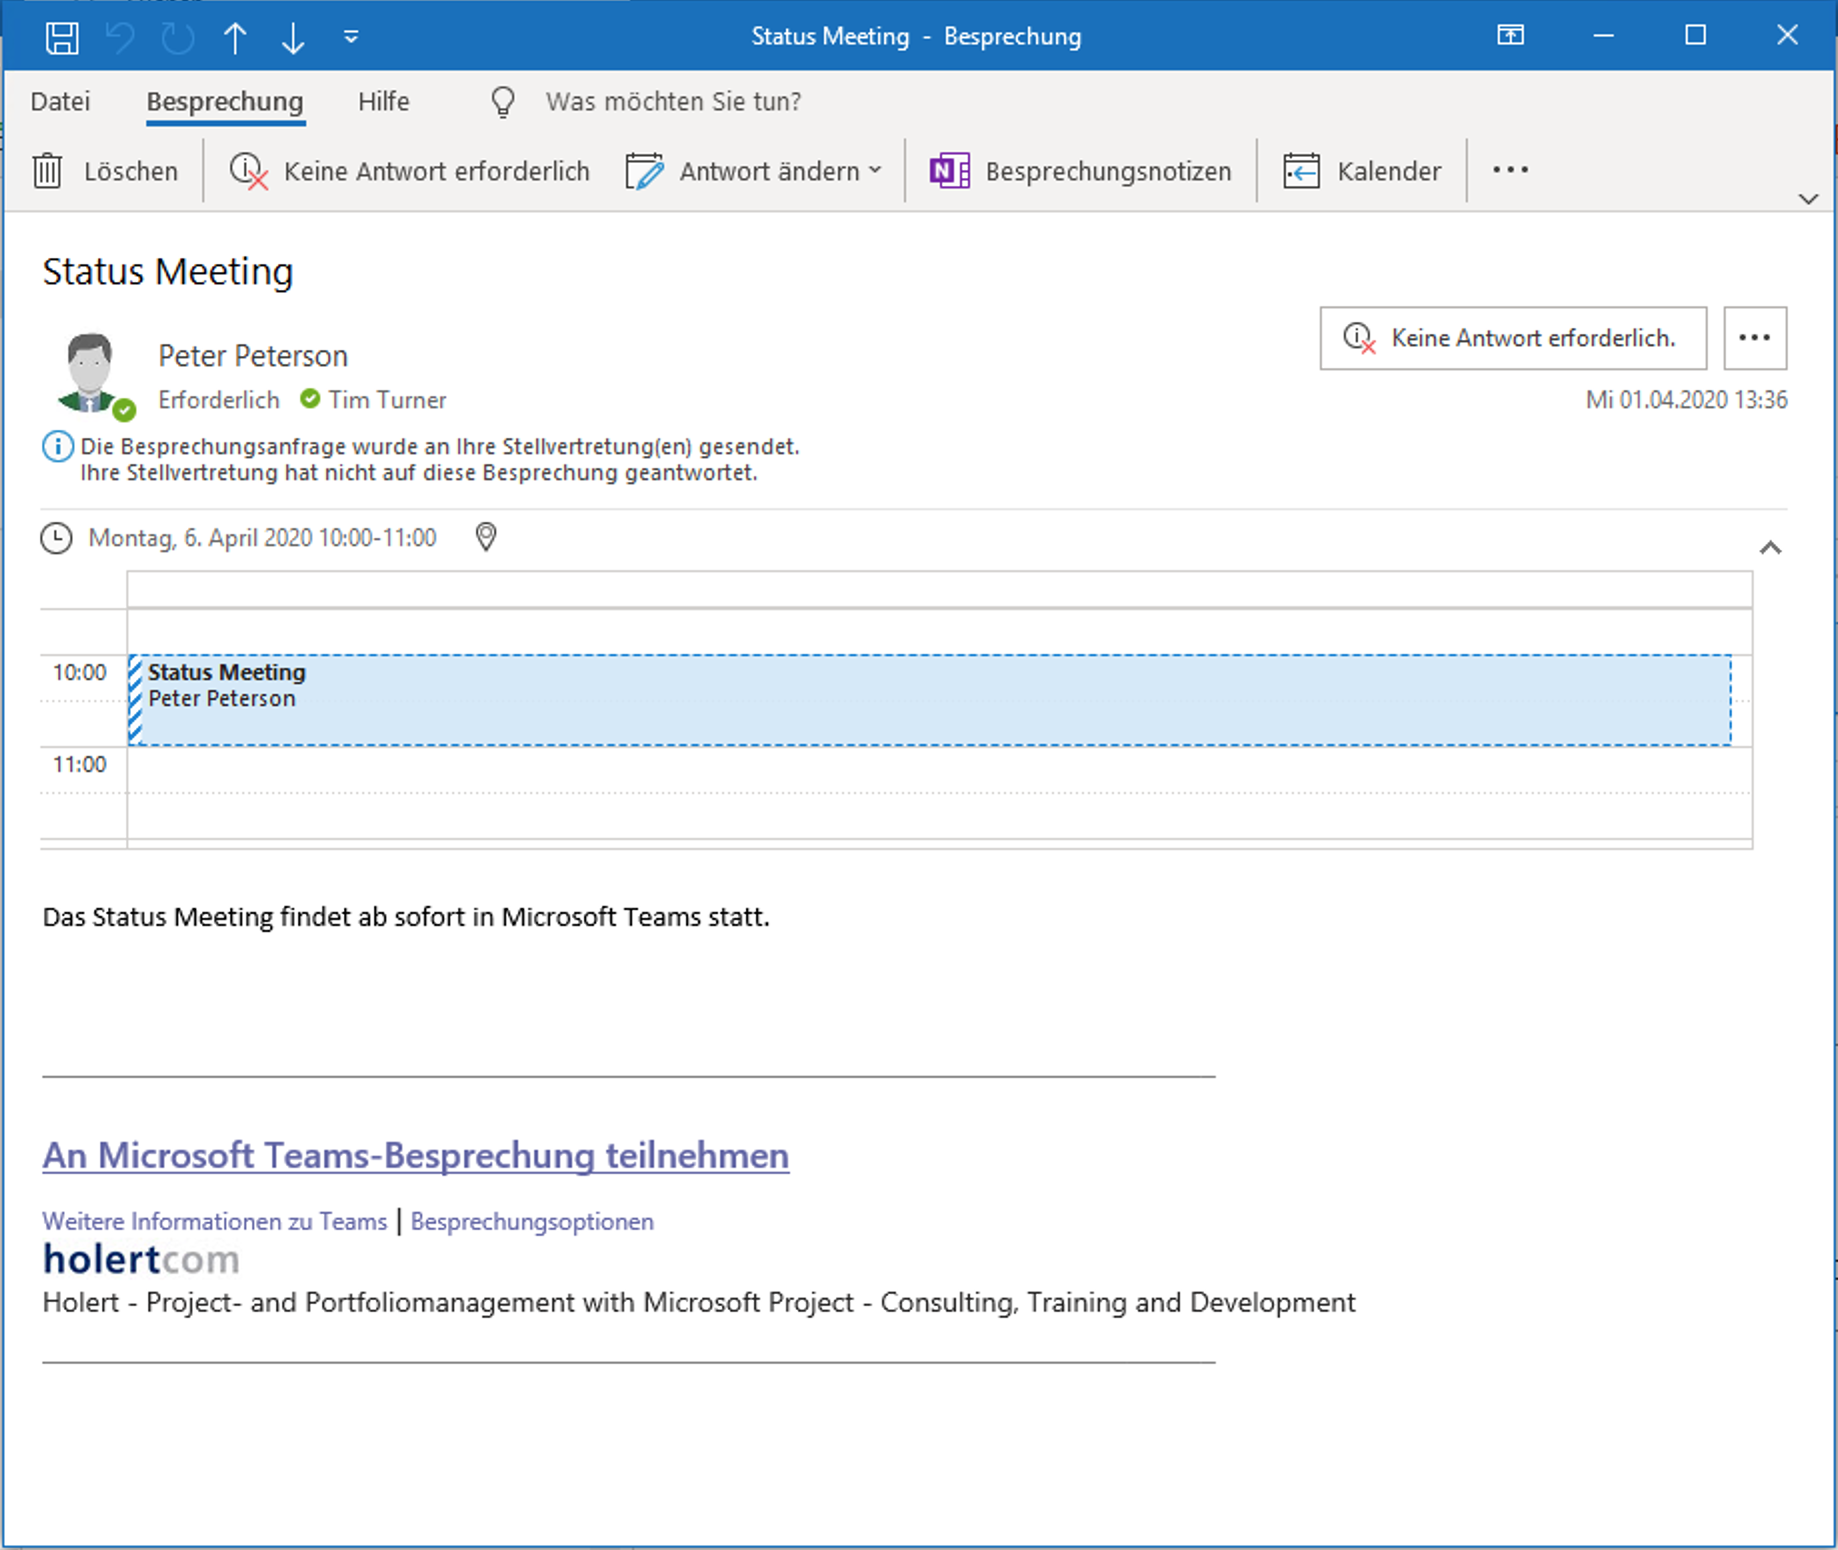  Email Mitteilung zum Microsoft Teams Meeting